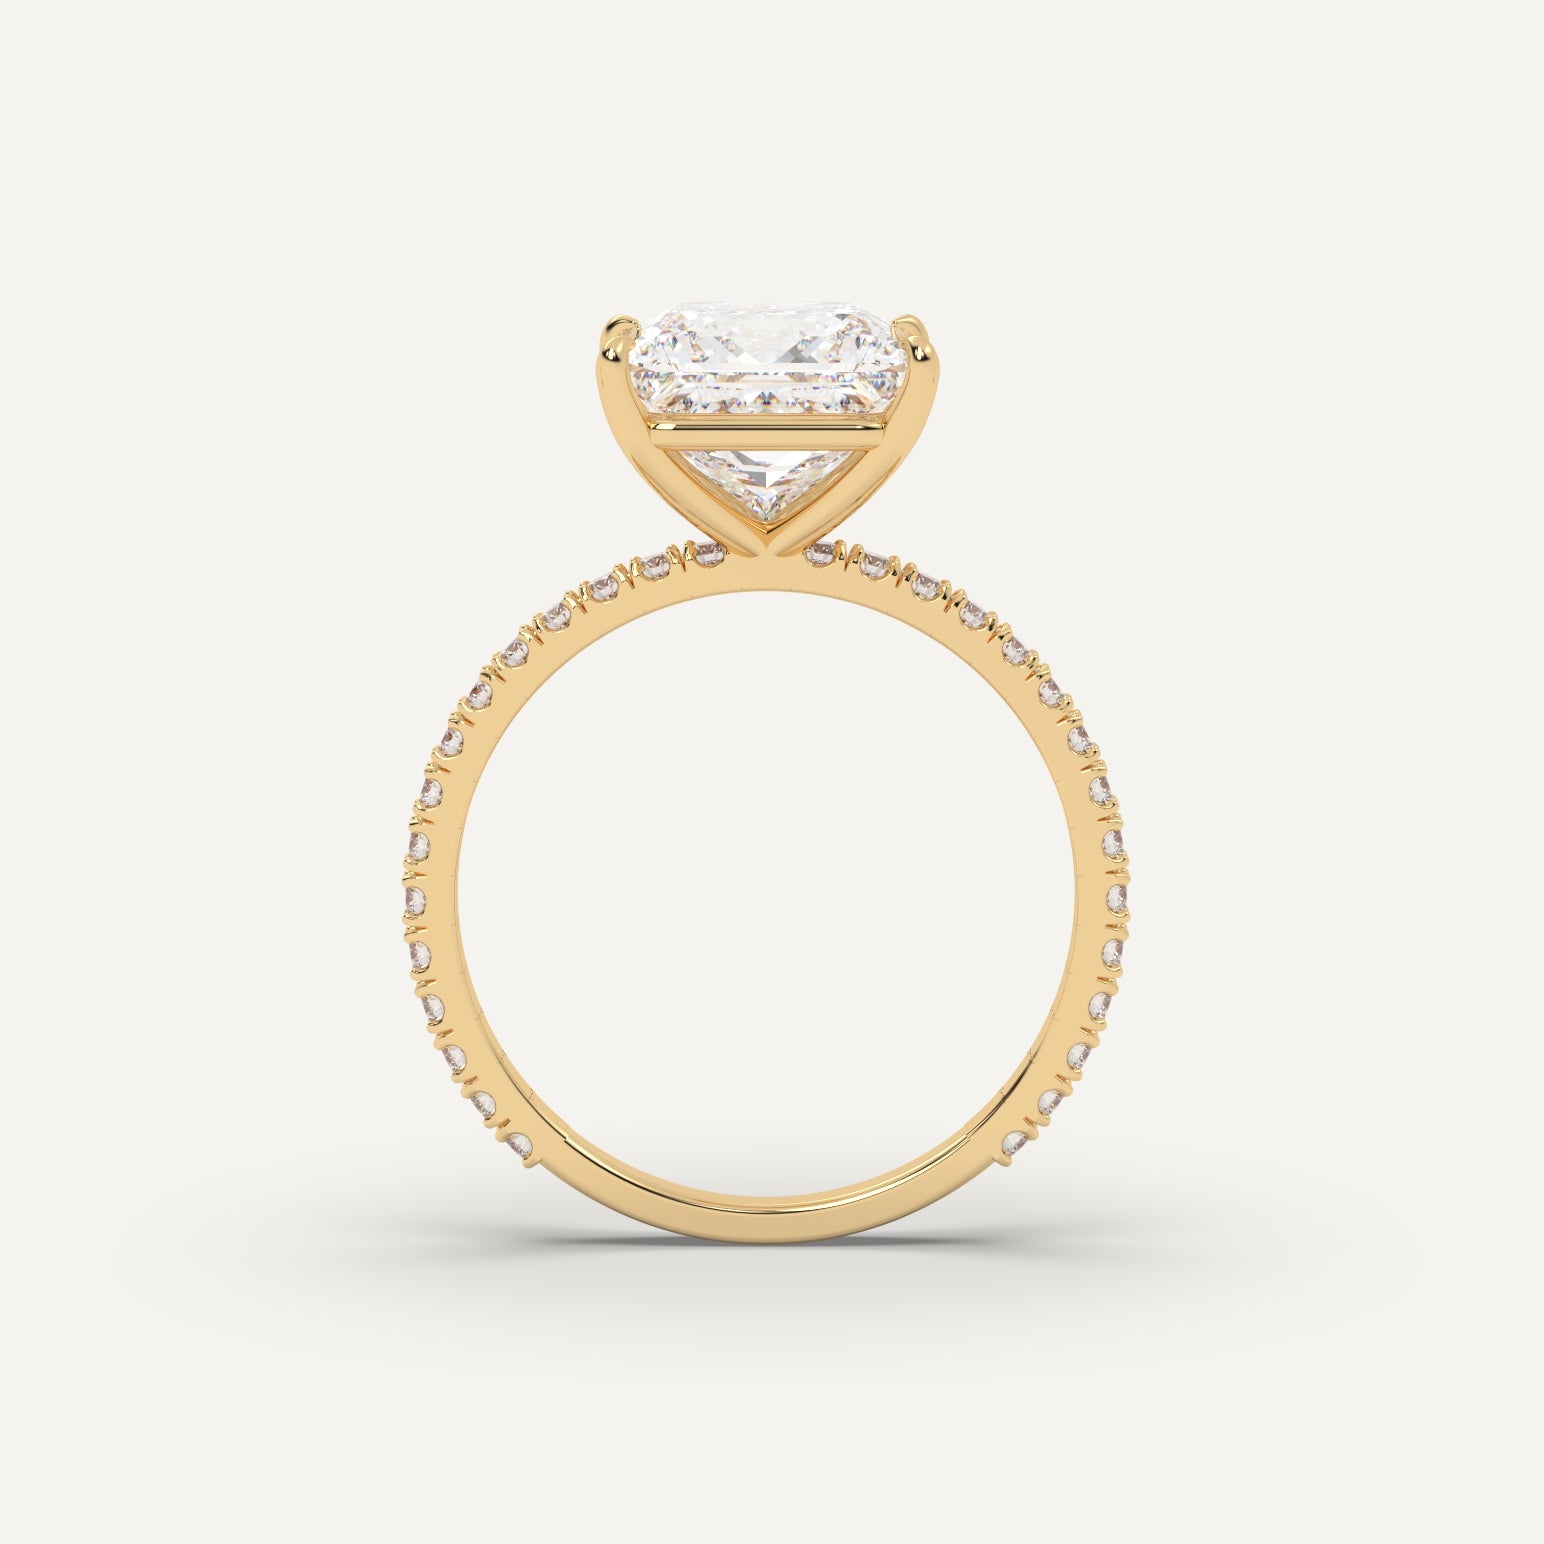 Princess Cut Diamond Engagement Ring - 3 carat